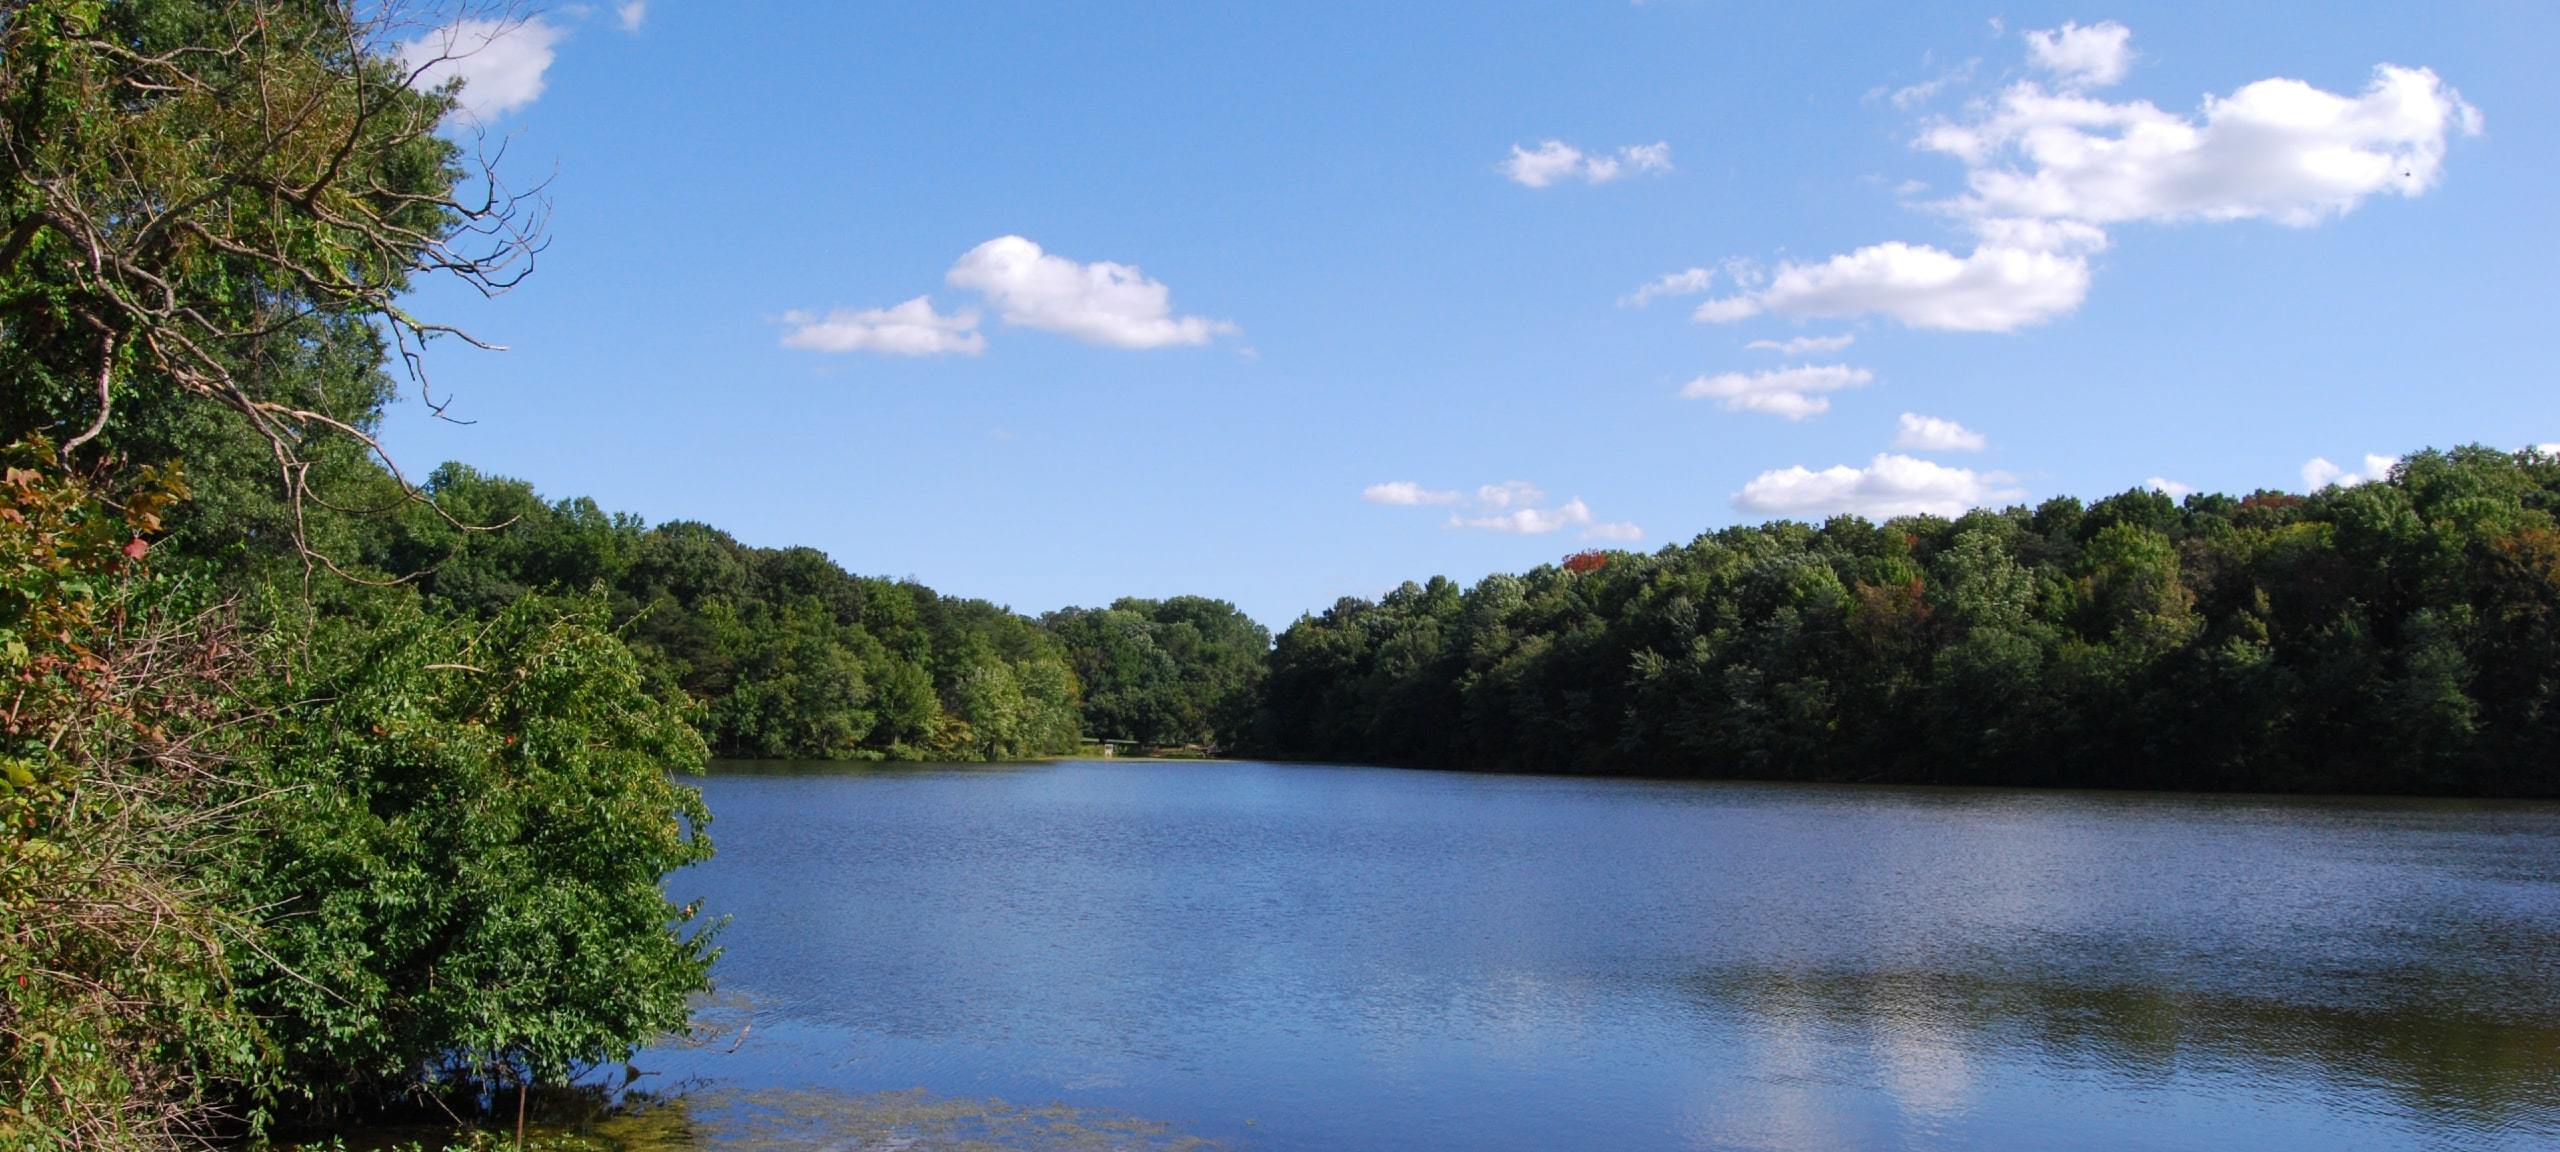 Sunny day at Greenbelt Park Lake in Greenbelt, Maryland